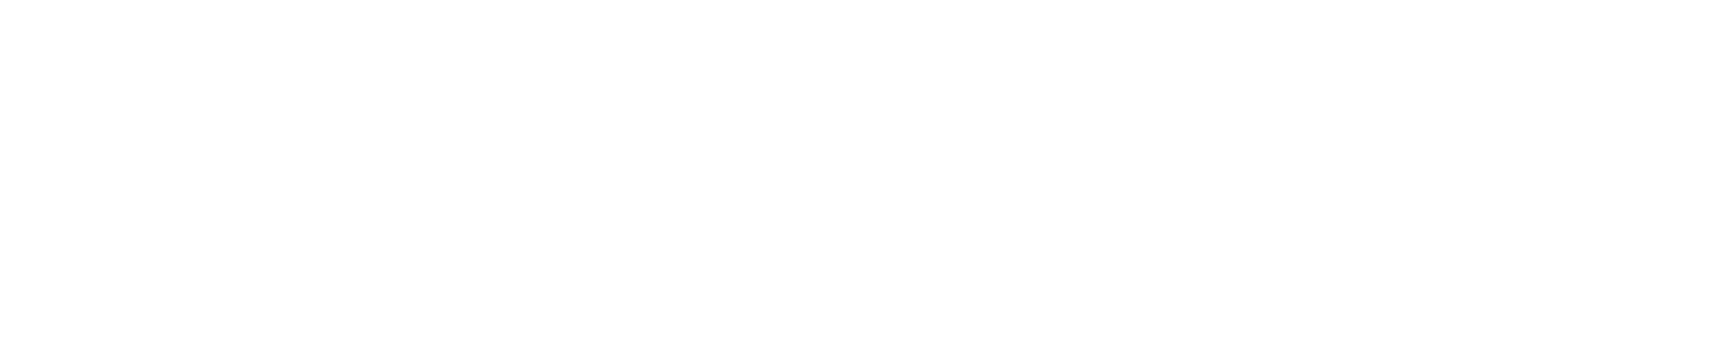 Instacart logo white